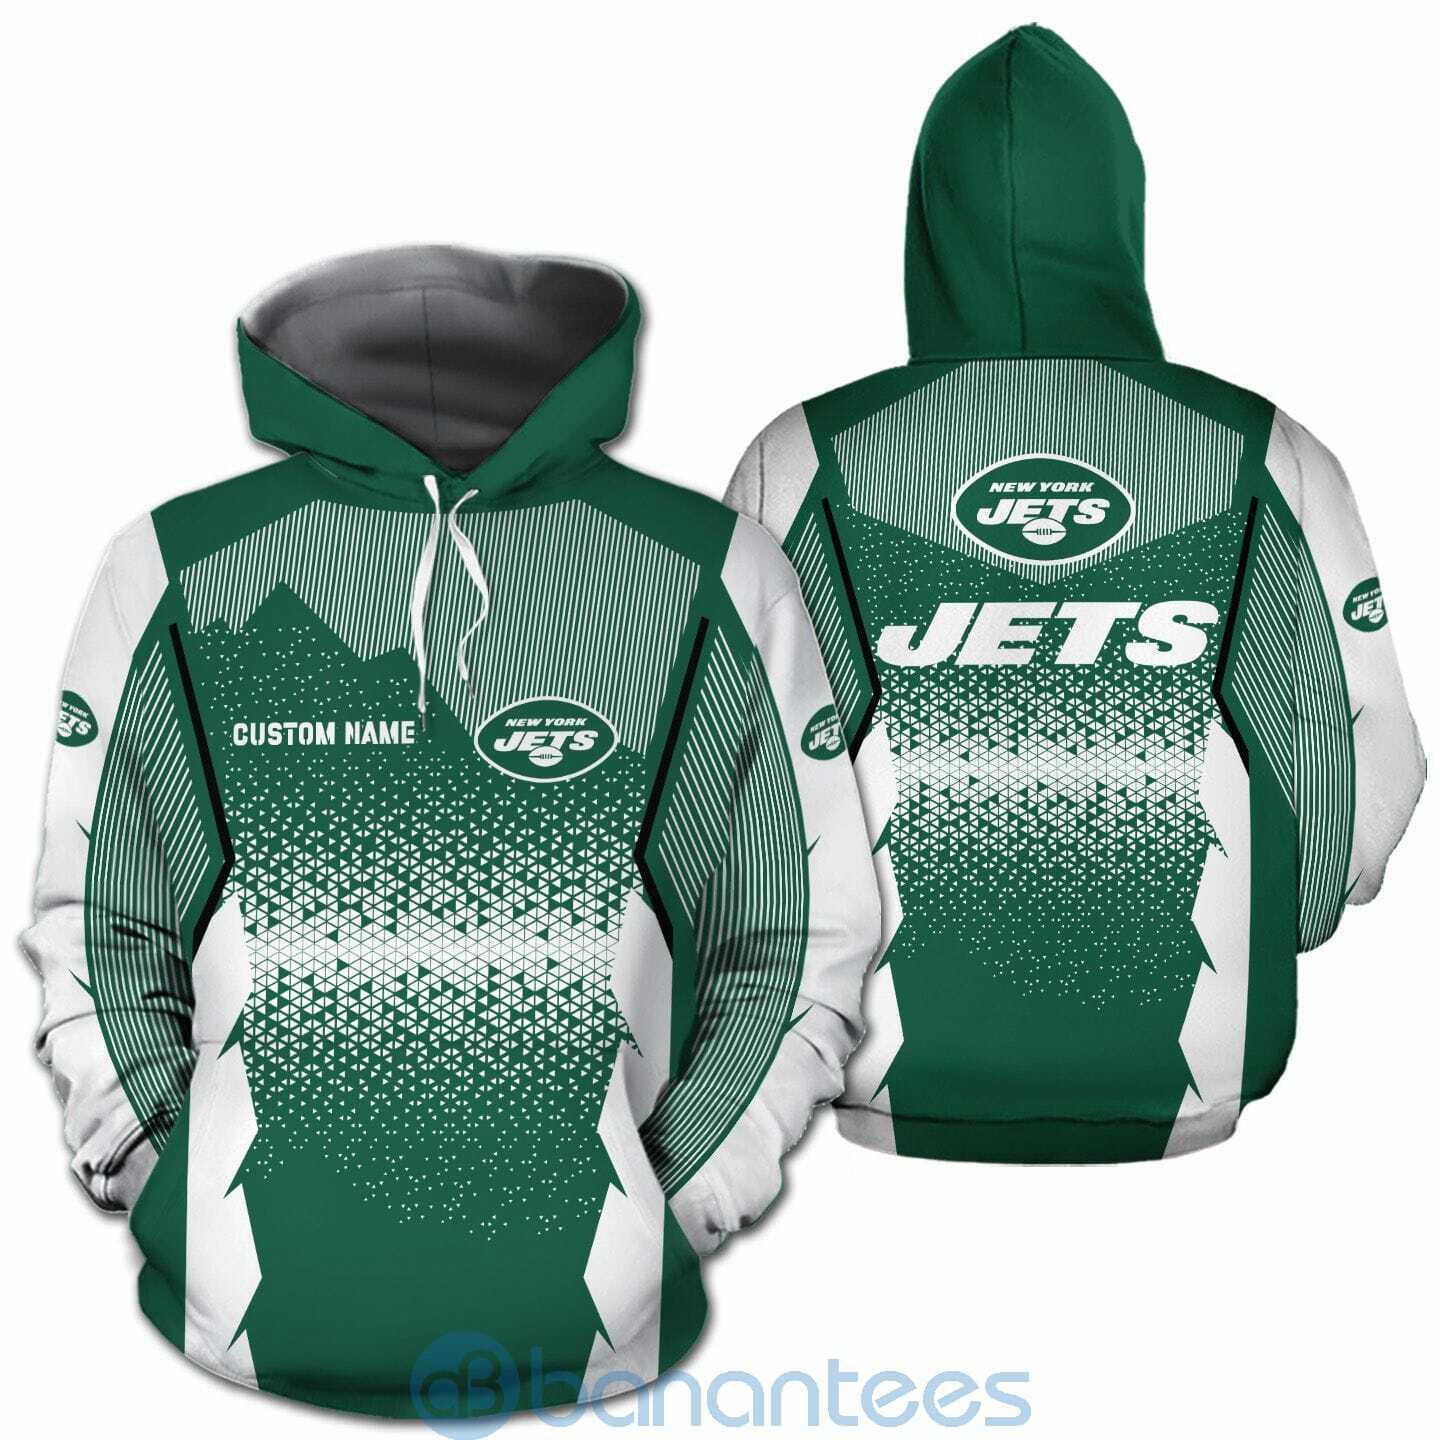 New York Jets NFL Football Team Custom Name 3D All Over Printed Shirt For Fans